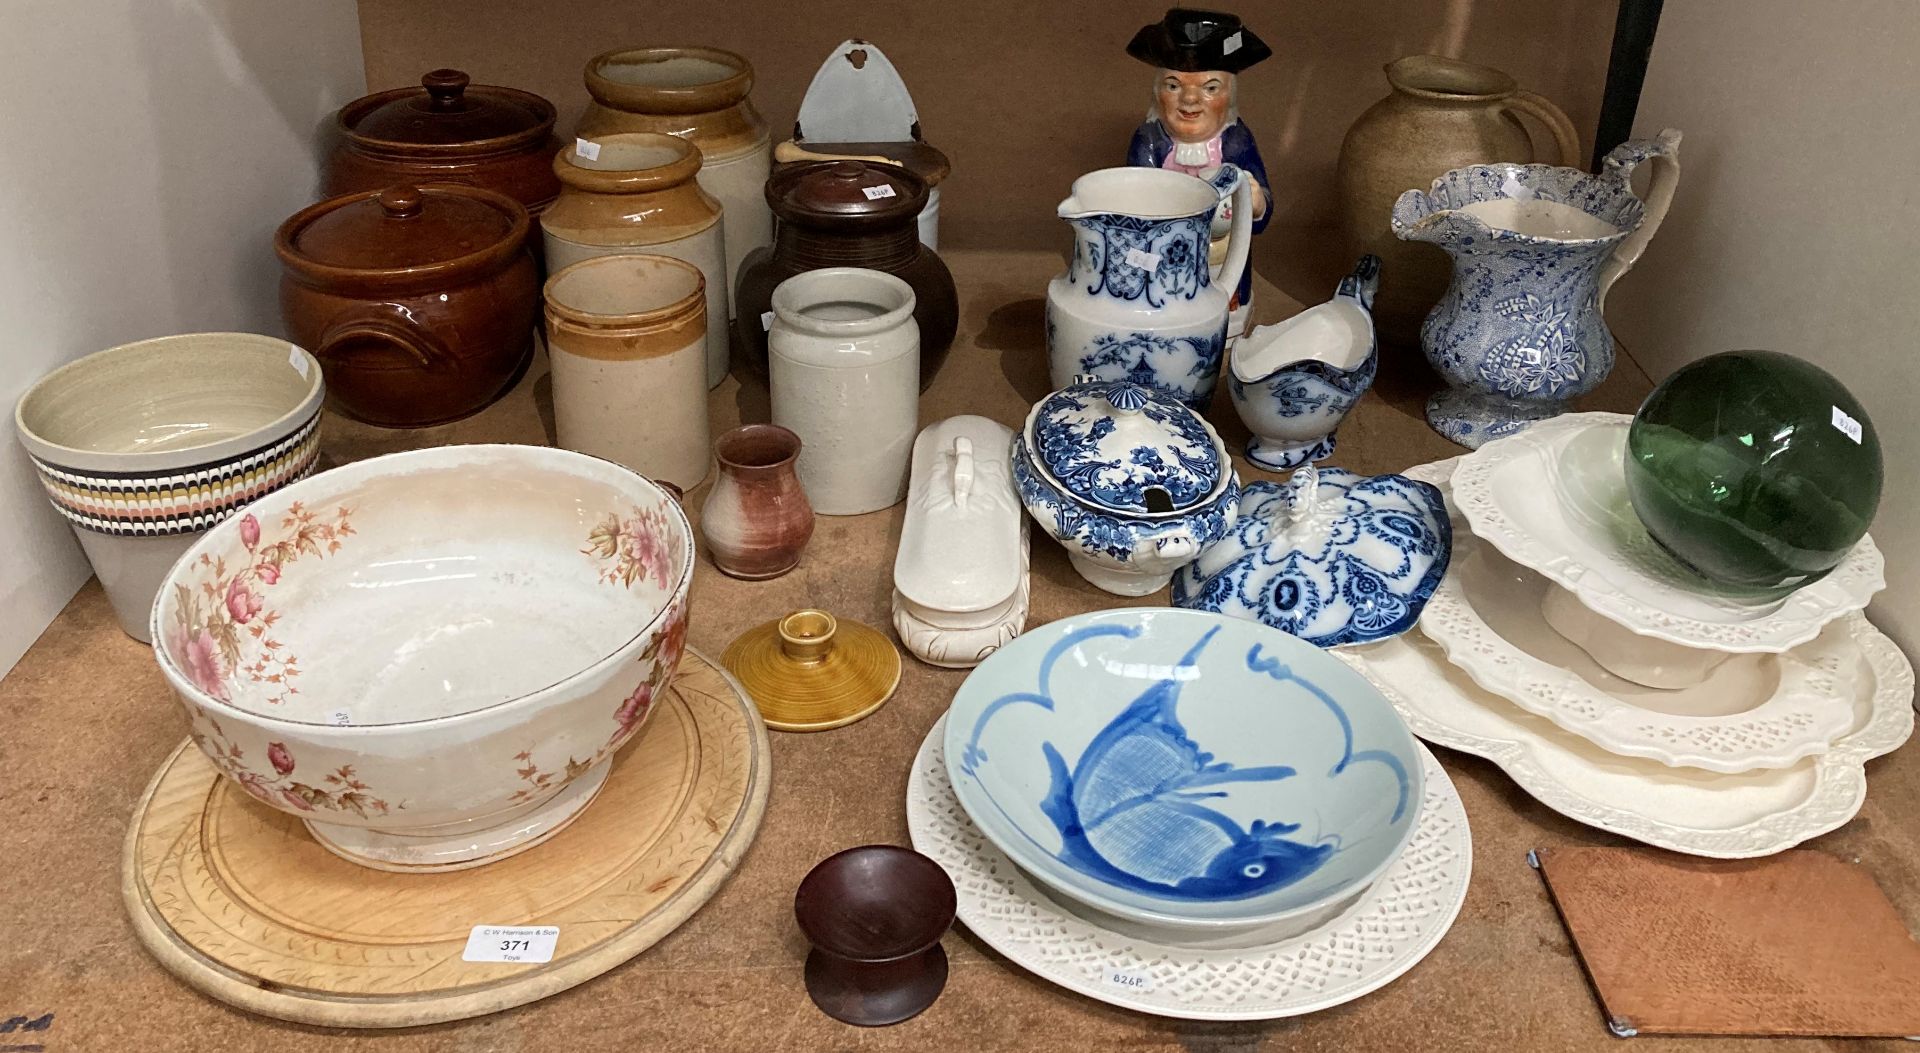 Remaining contents to rack - assorted creamware, ceramic jugs,